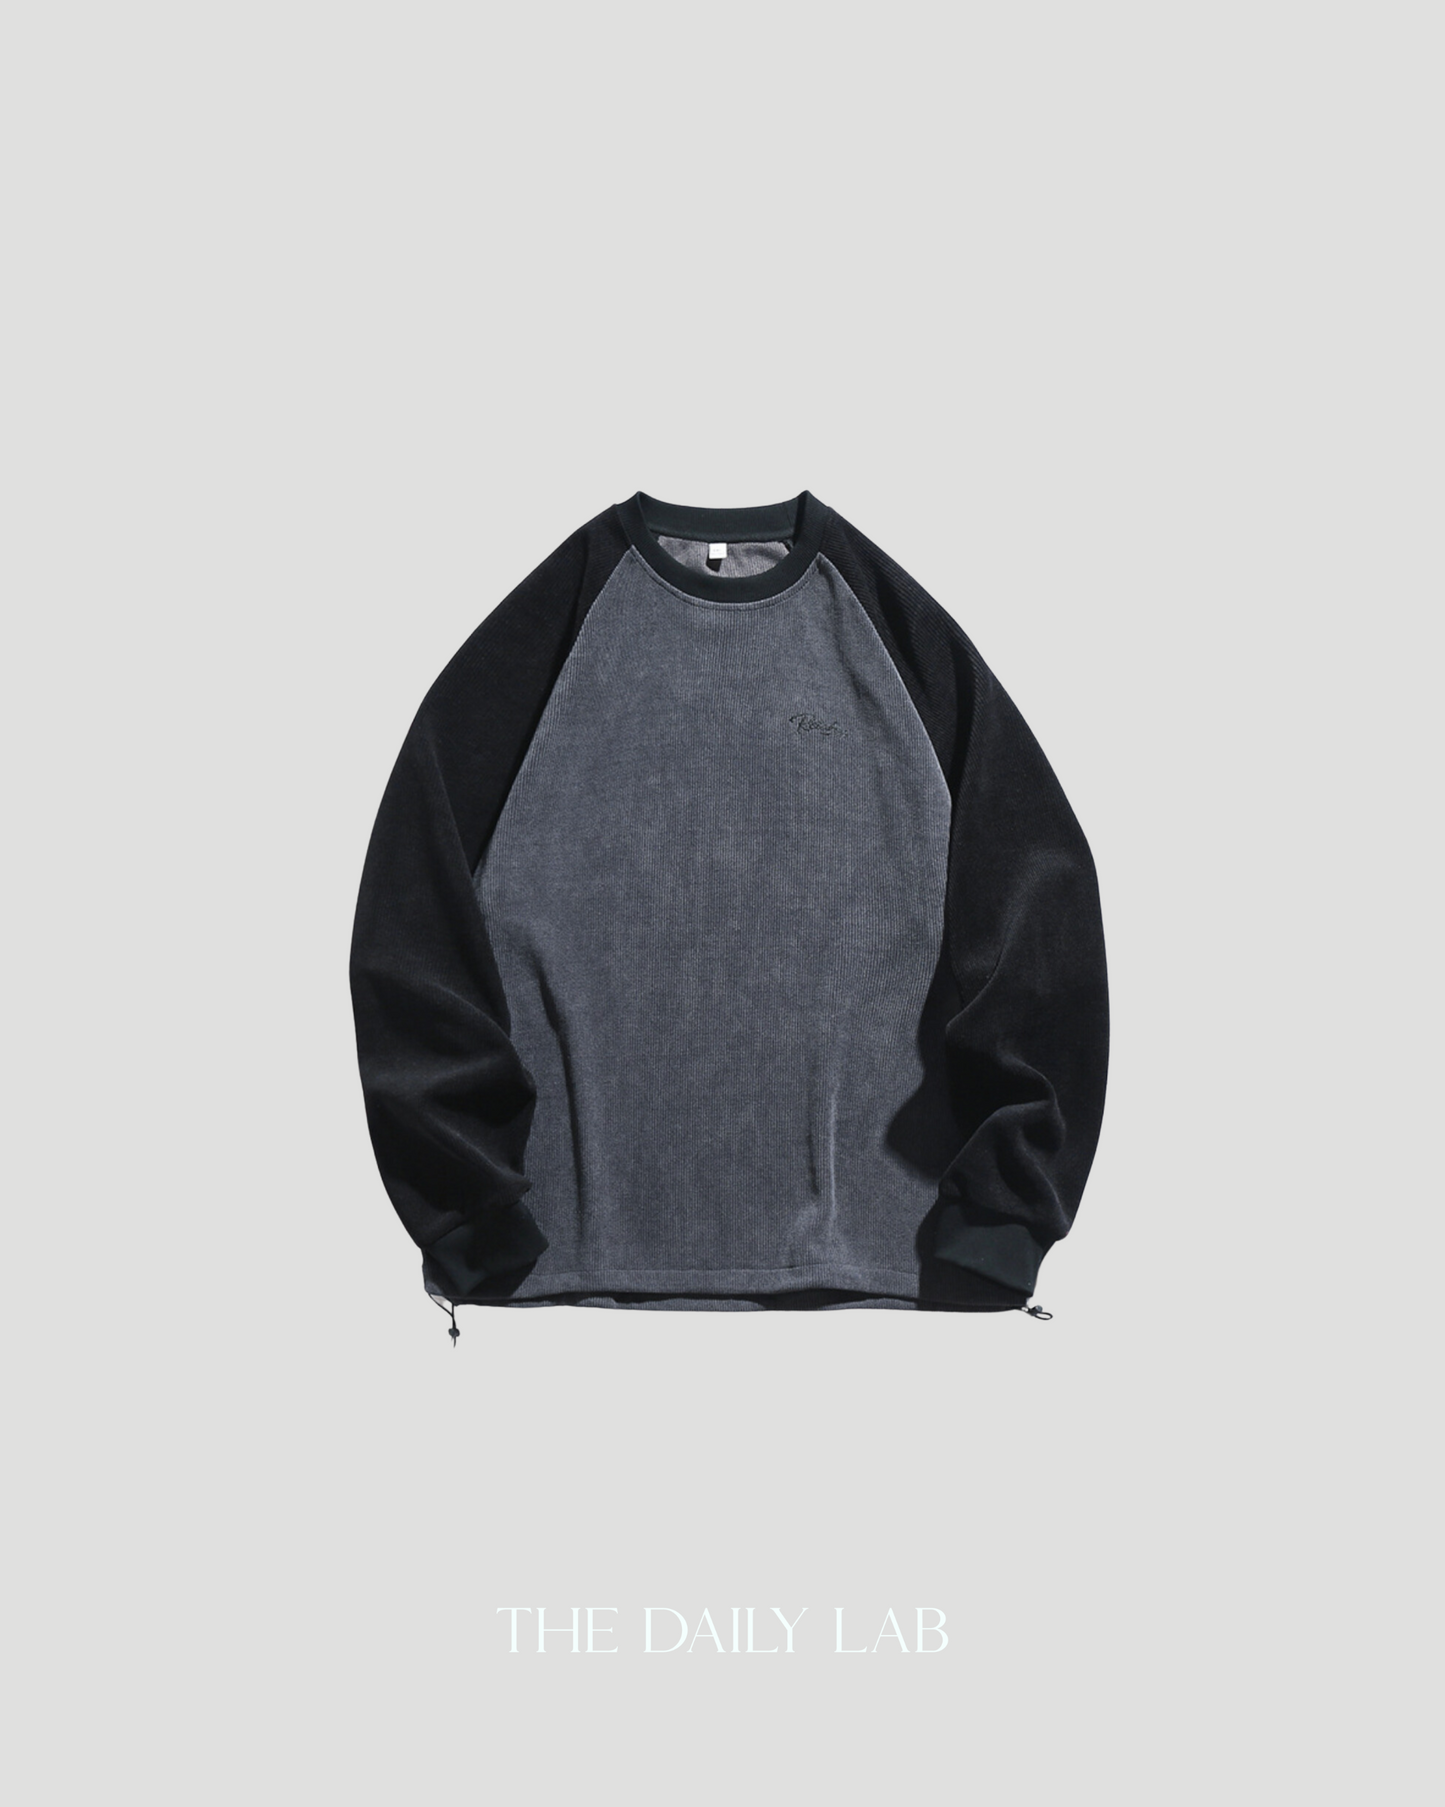 380G Street Patch Sweater in Black